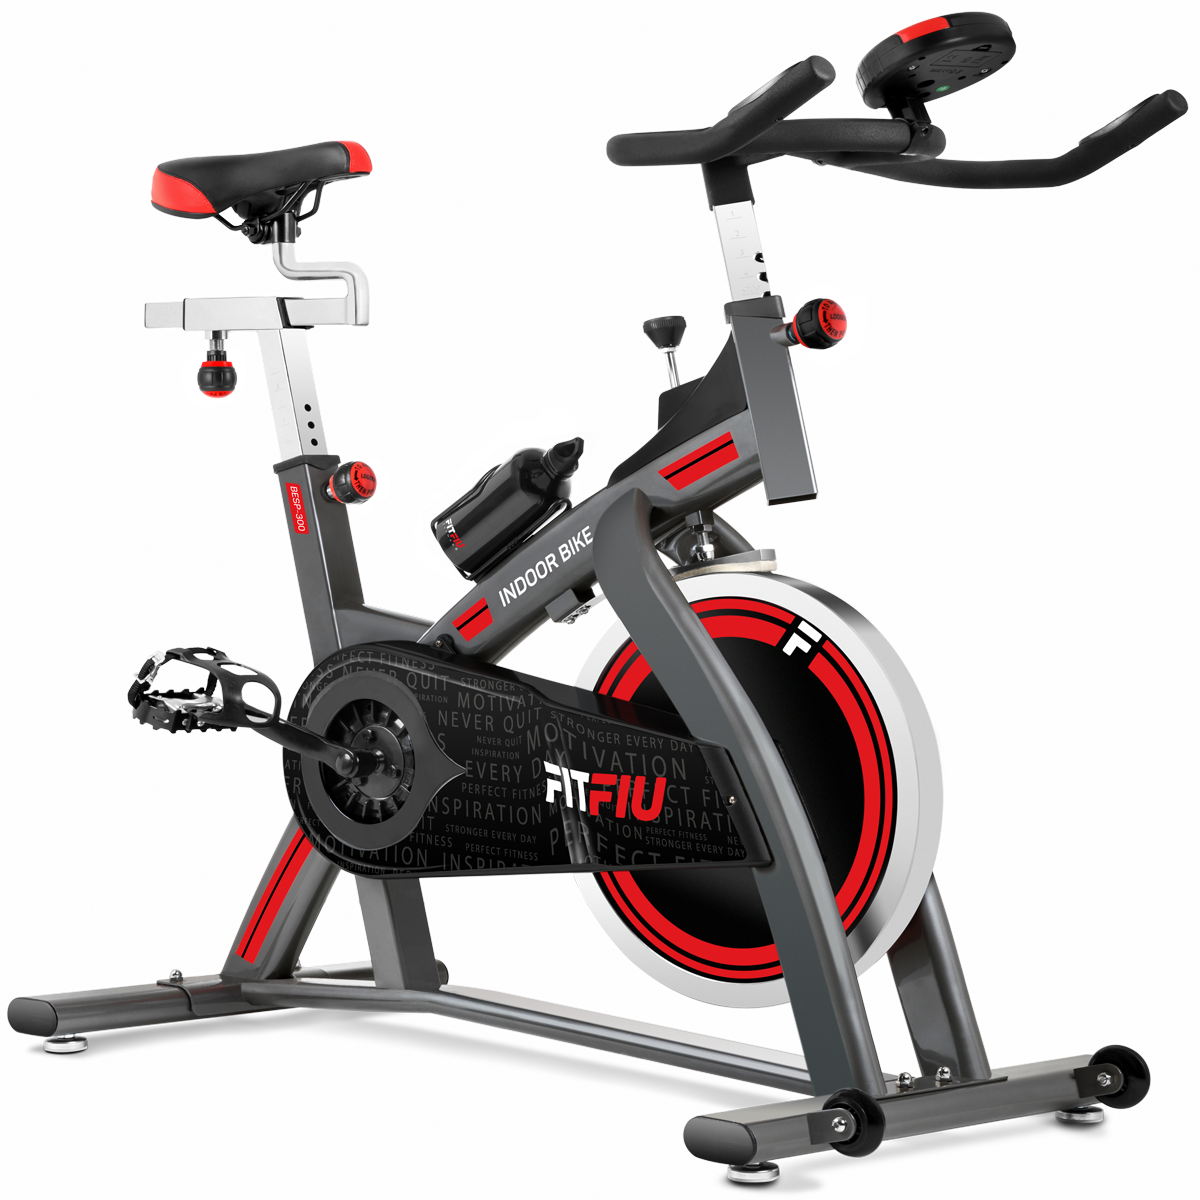 Fitfiu Fitness Besp300 bicicleta spinning besp24 profesional volante inercia pantalla lcd unisex adulto negro 24kg besp3